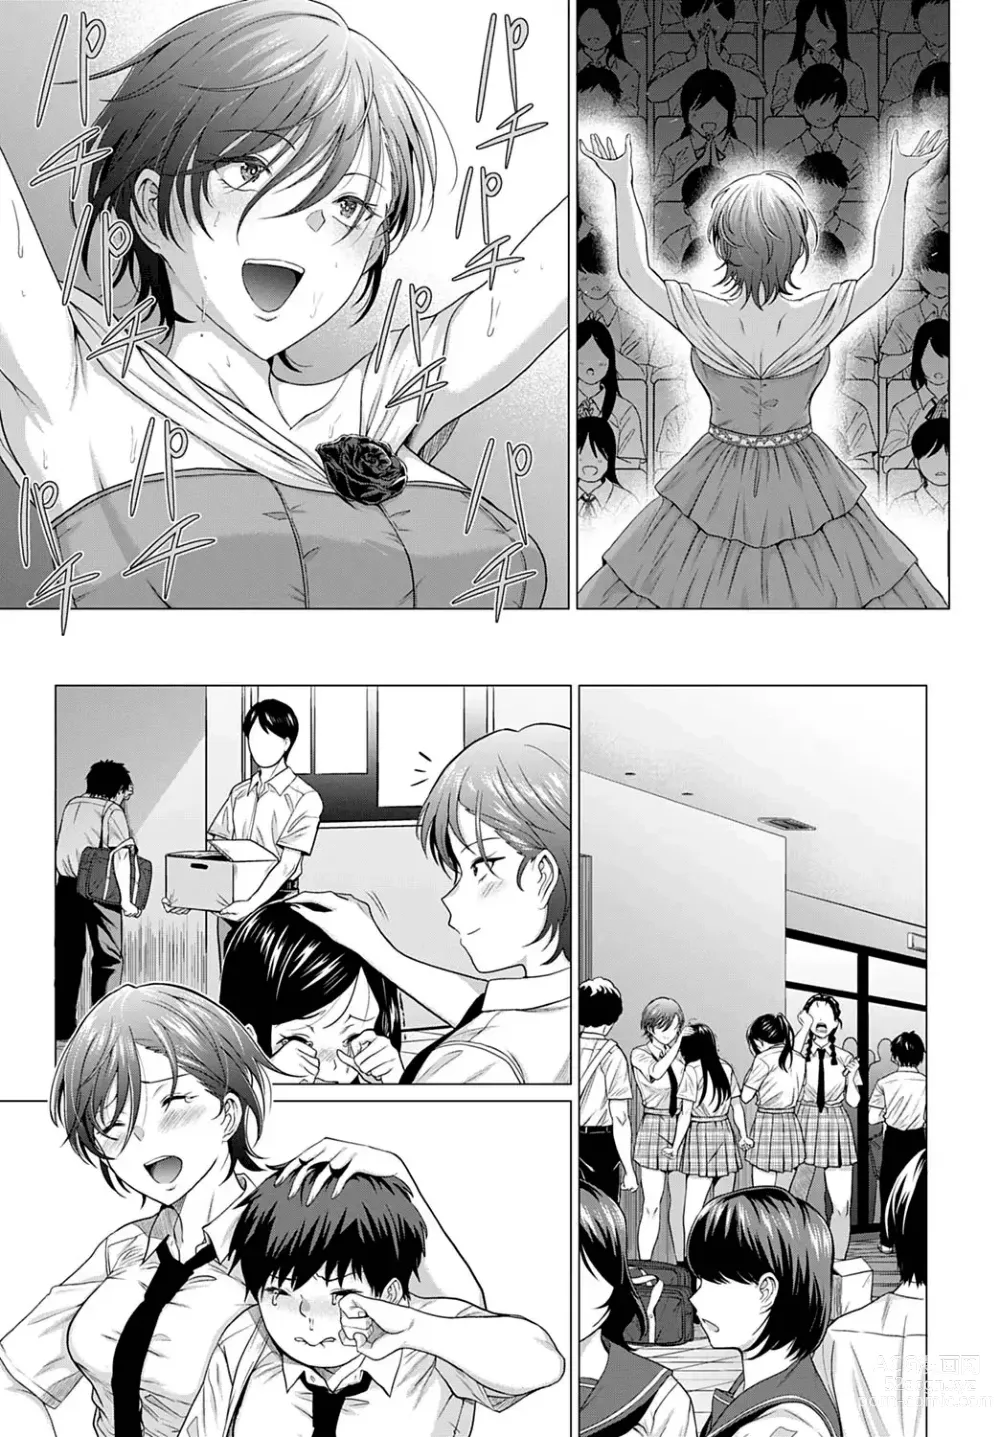 Page 7 of manga Шоу должно продолжаться!